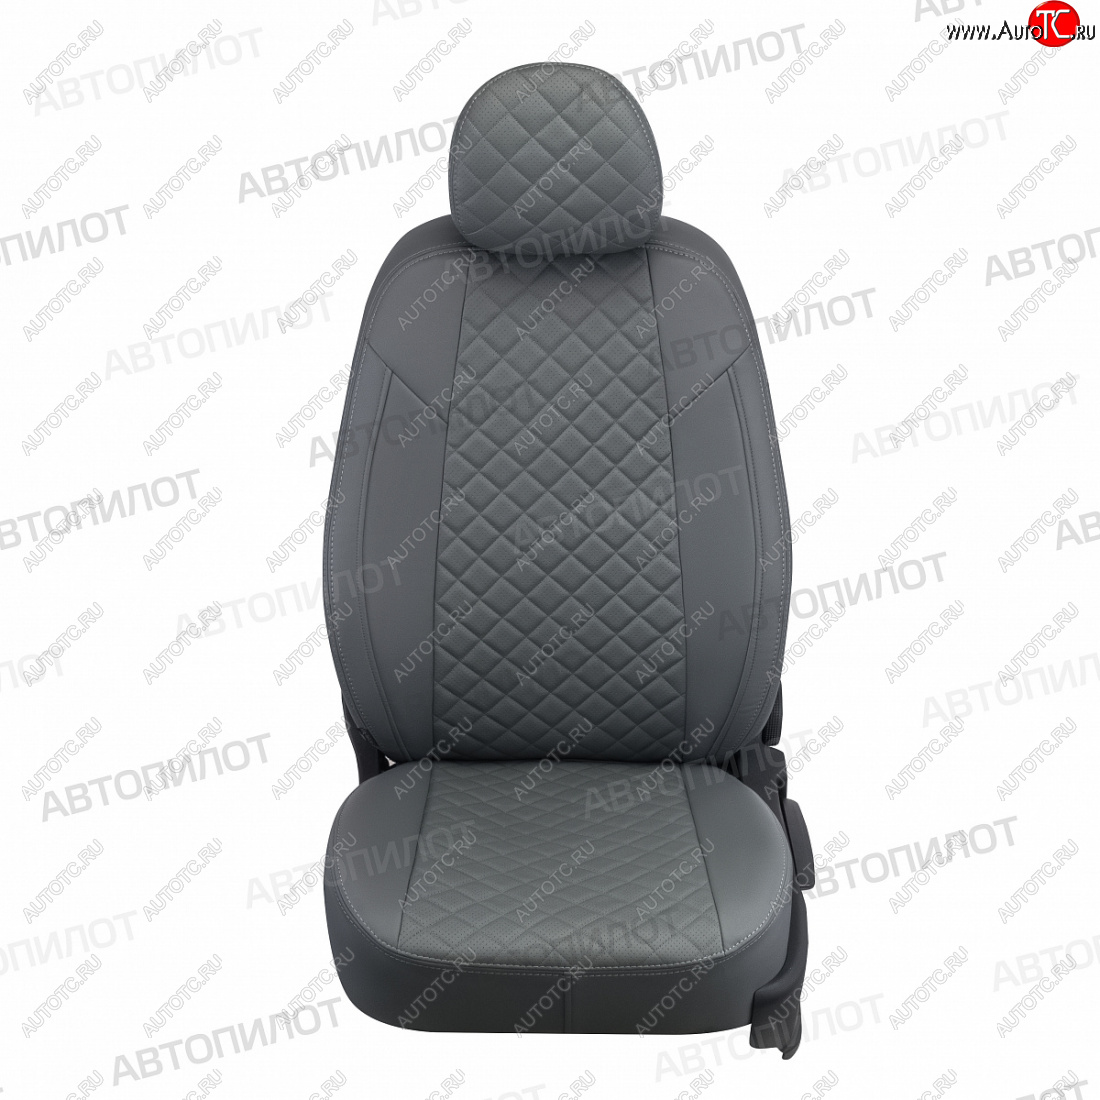 7 599 р. Чехлы сидений (экокожа, Classic) Автопилот Ромб  KIA Cerato  3 YD (2013-2019) (серый)